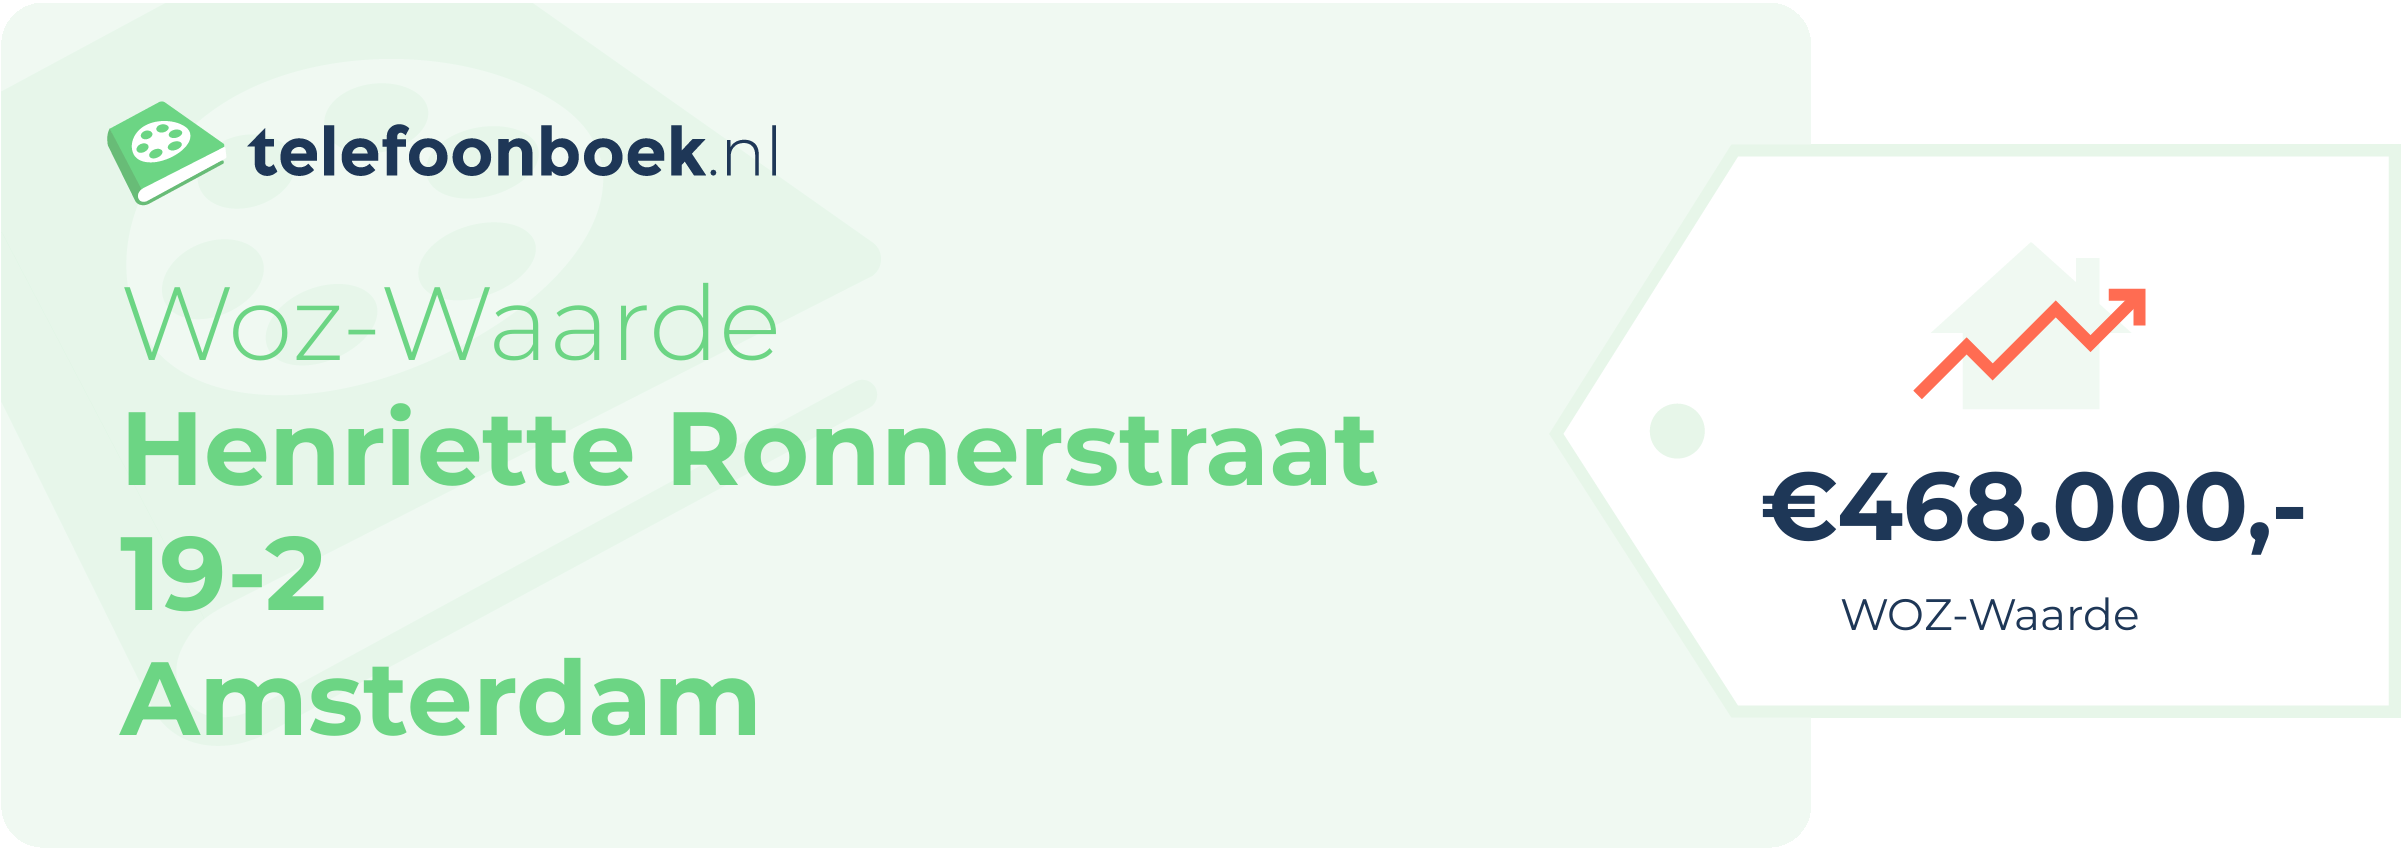 WOZ-waarde Henriette Ronnerstraat 19-2 Amsterdam